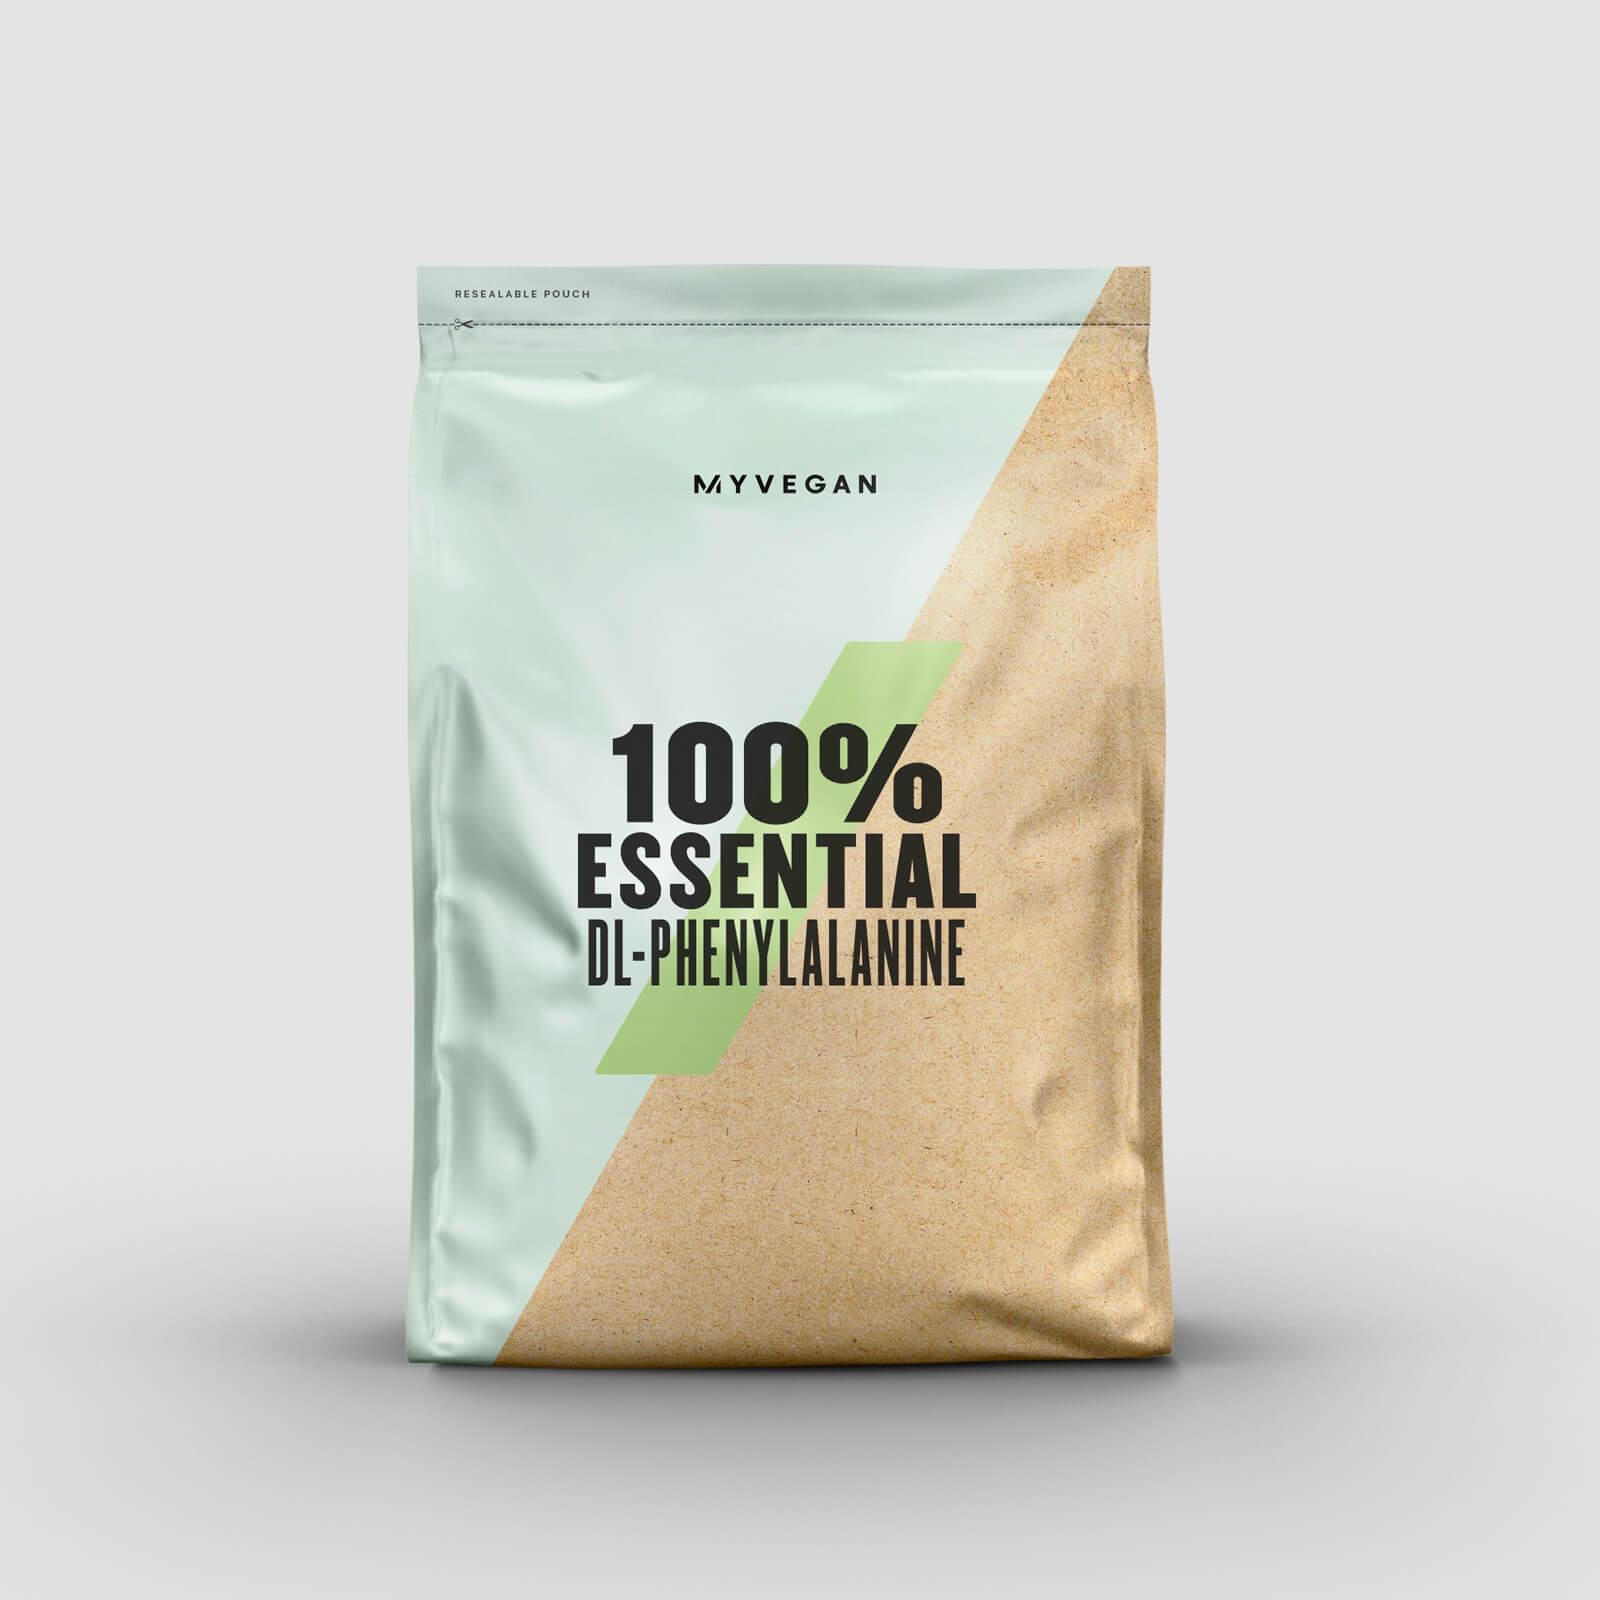 100% Essential DL-Phenylalanine